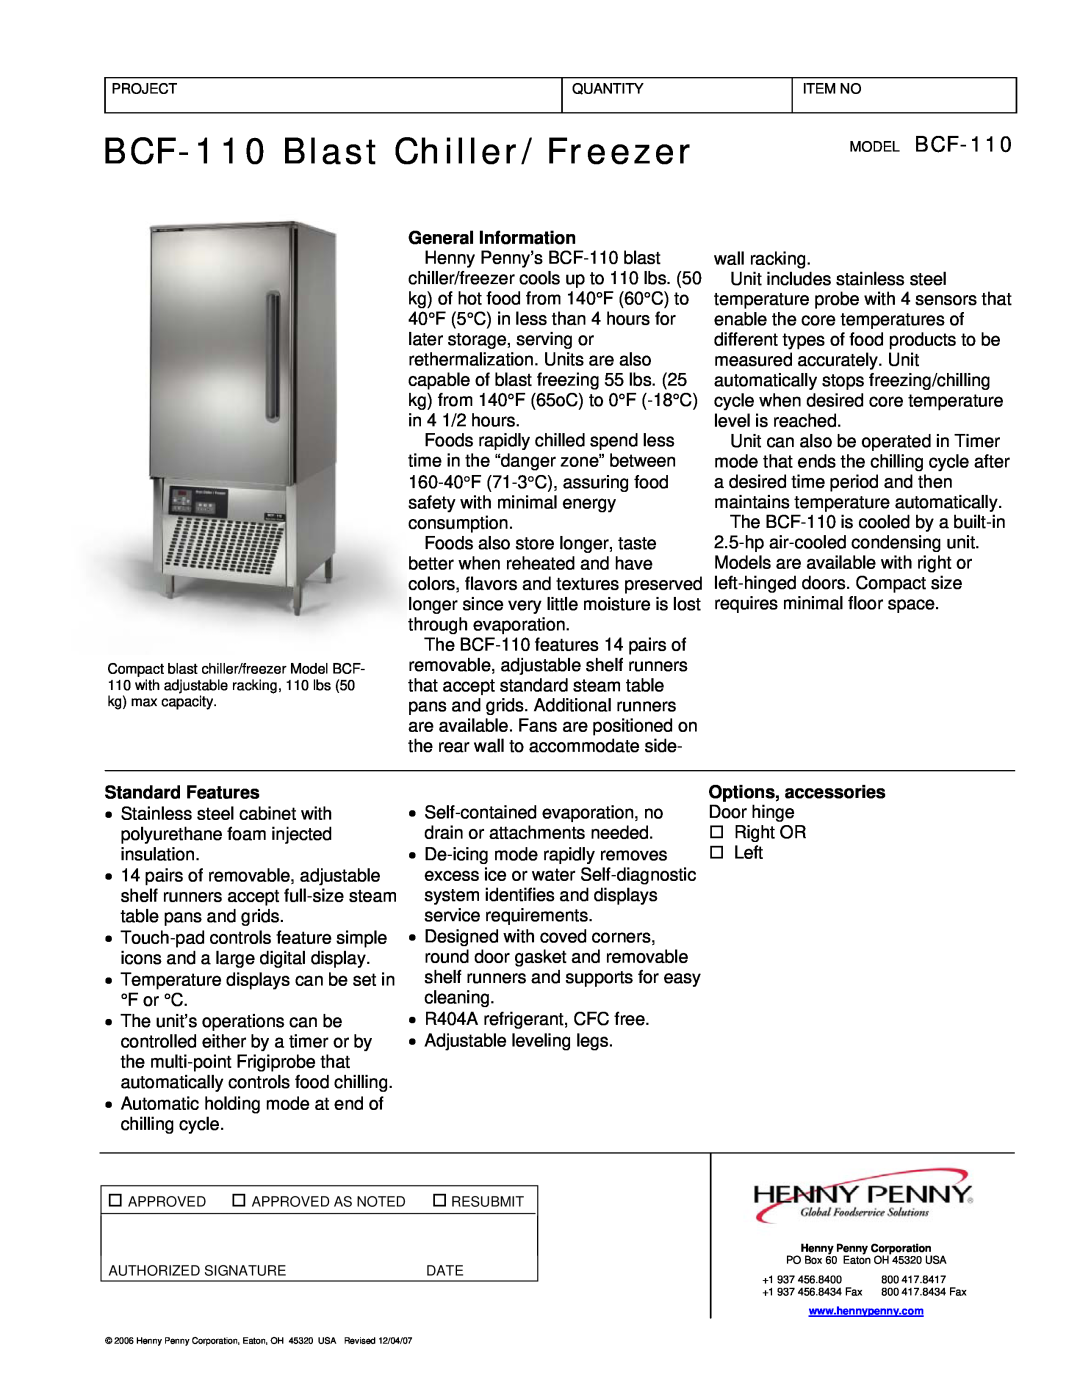 Henny Penny manual BCF-110Blast Chiller/Freezer, MODEL BCF-110, General Information, Standard Features 